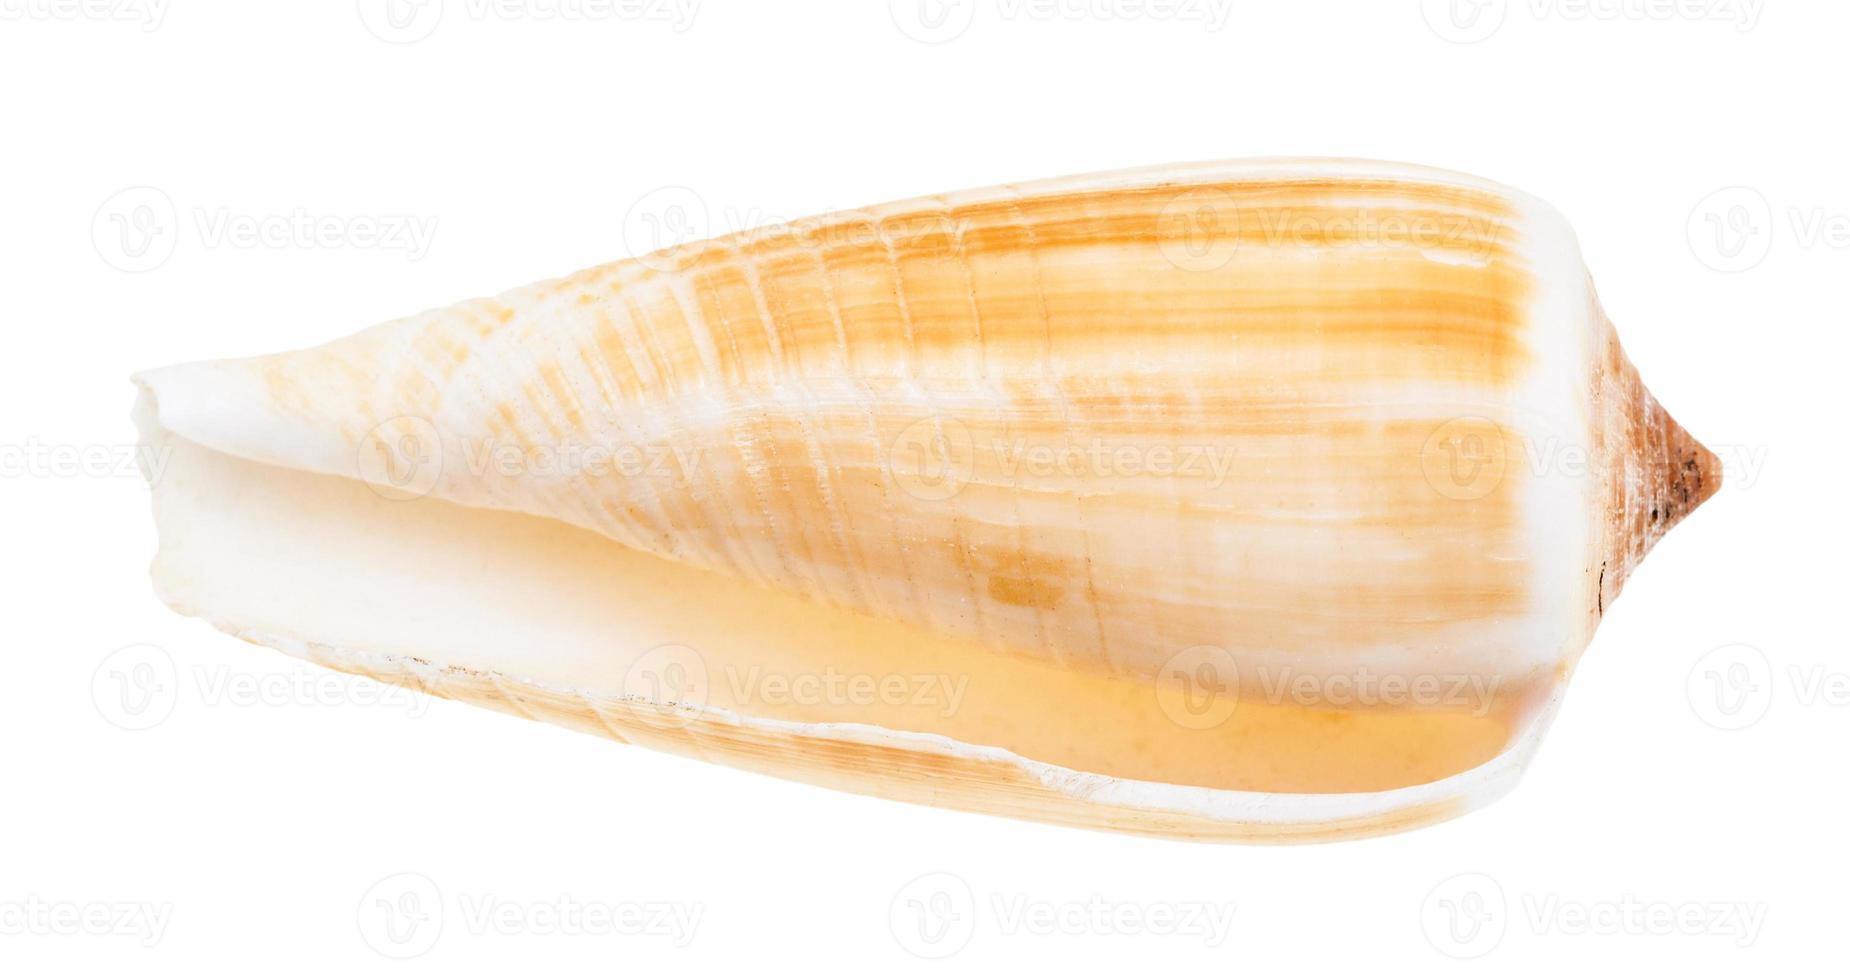 concha vazia de caracol de conus isolada em branco foto